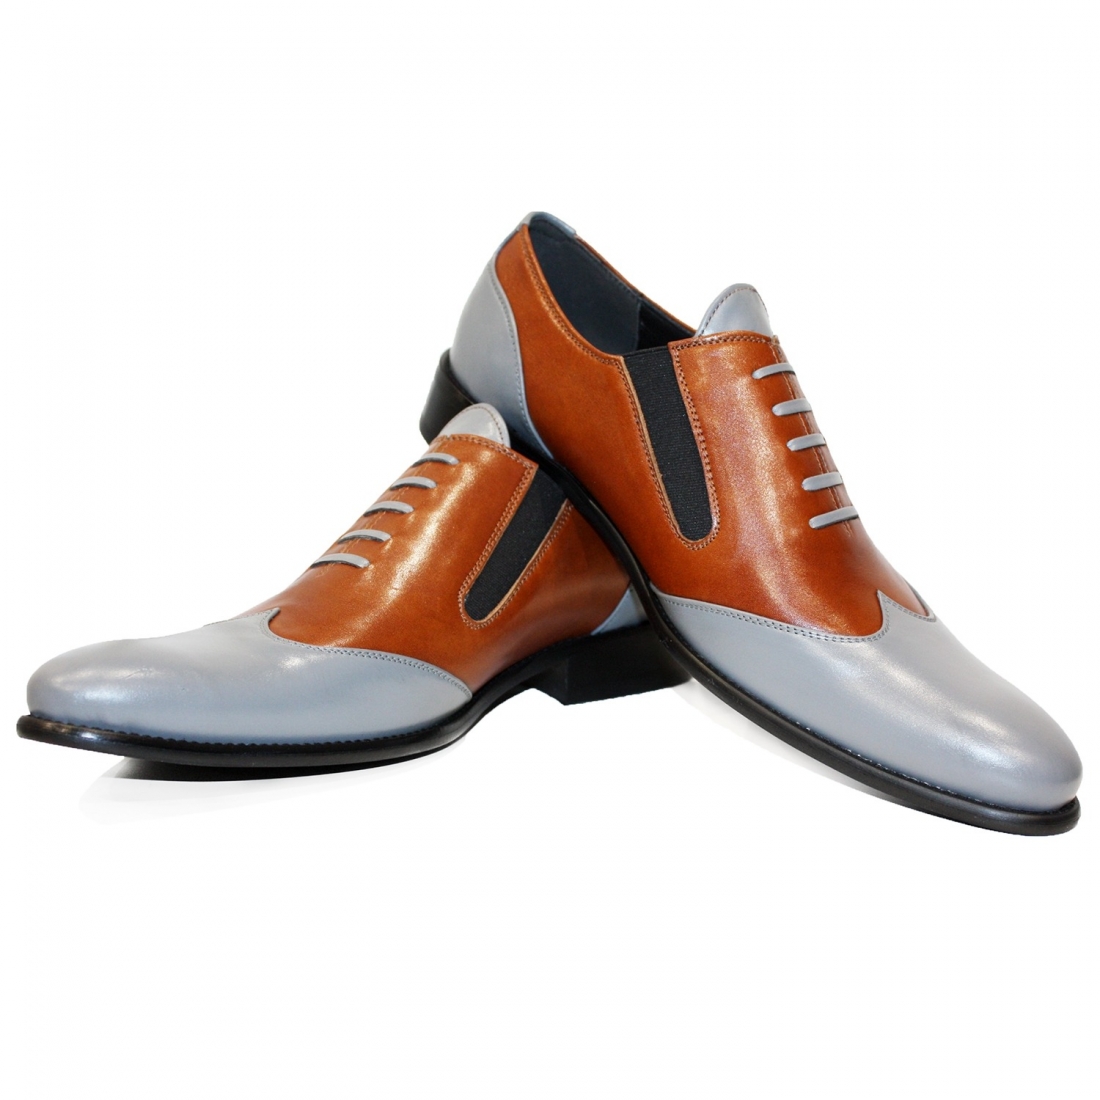 Modello Jabello - Mocassini - Handmade Colorful Italian Leather Shoes